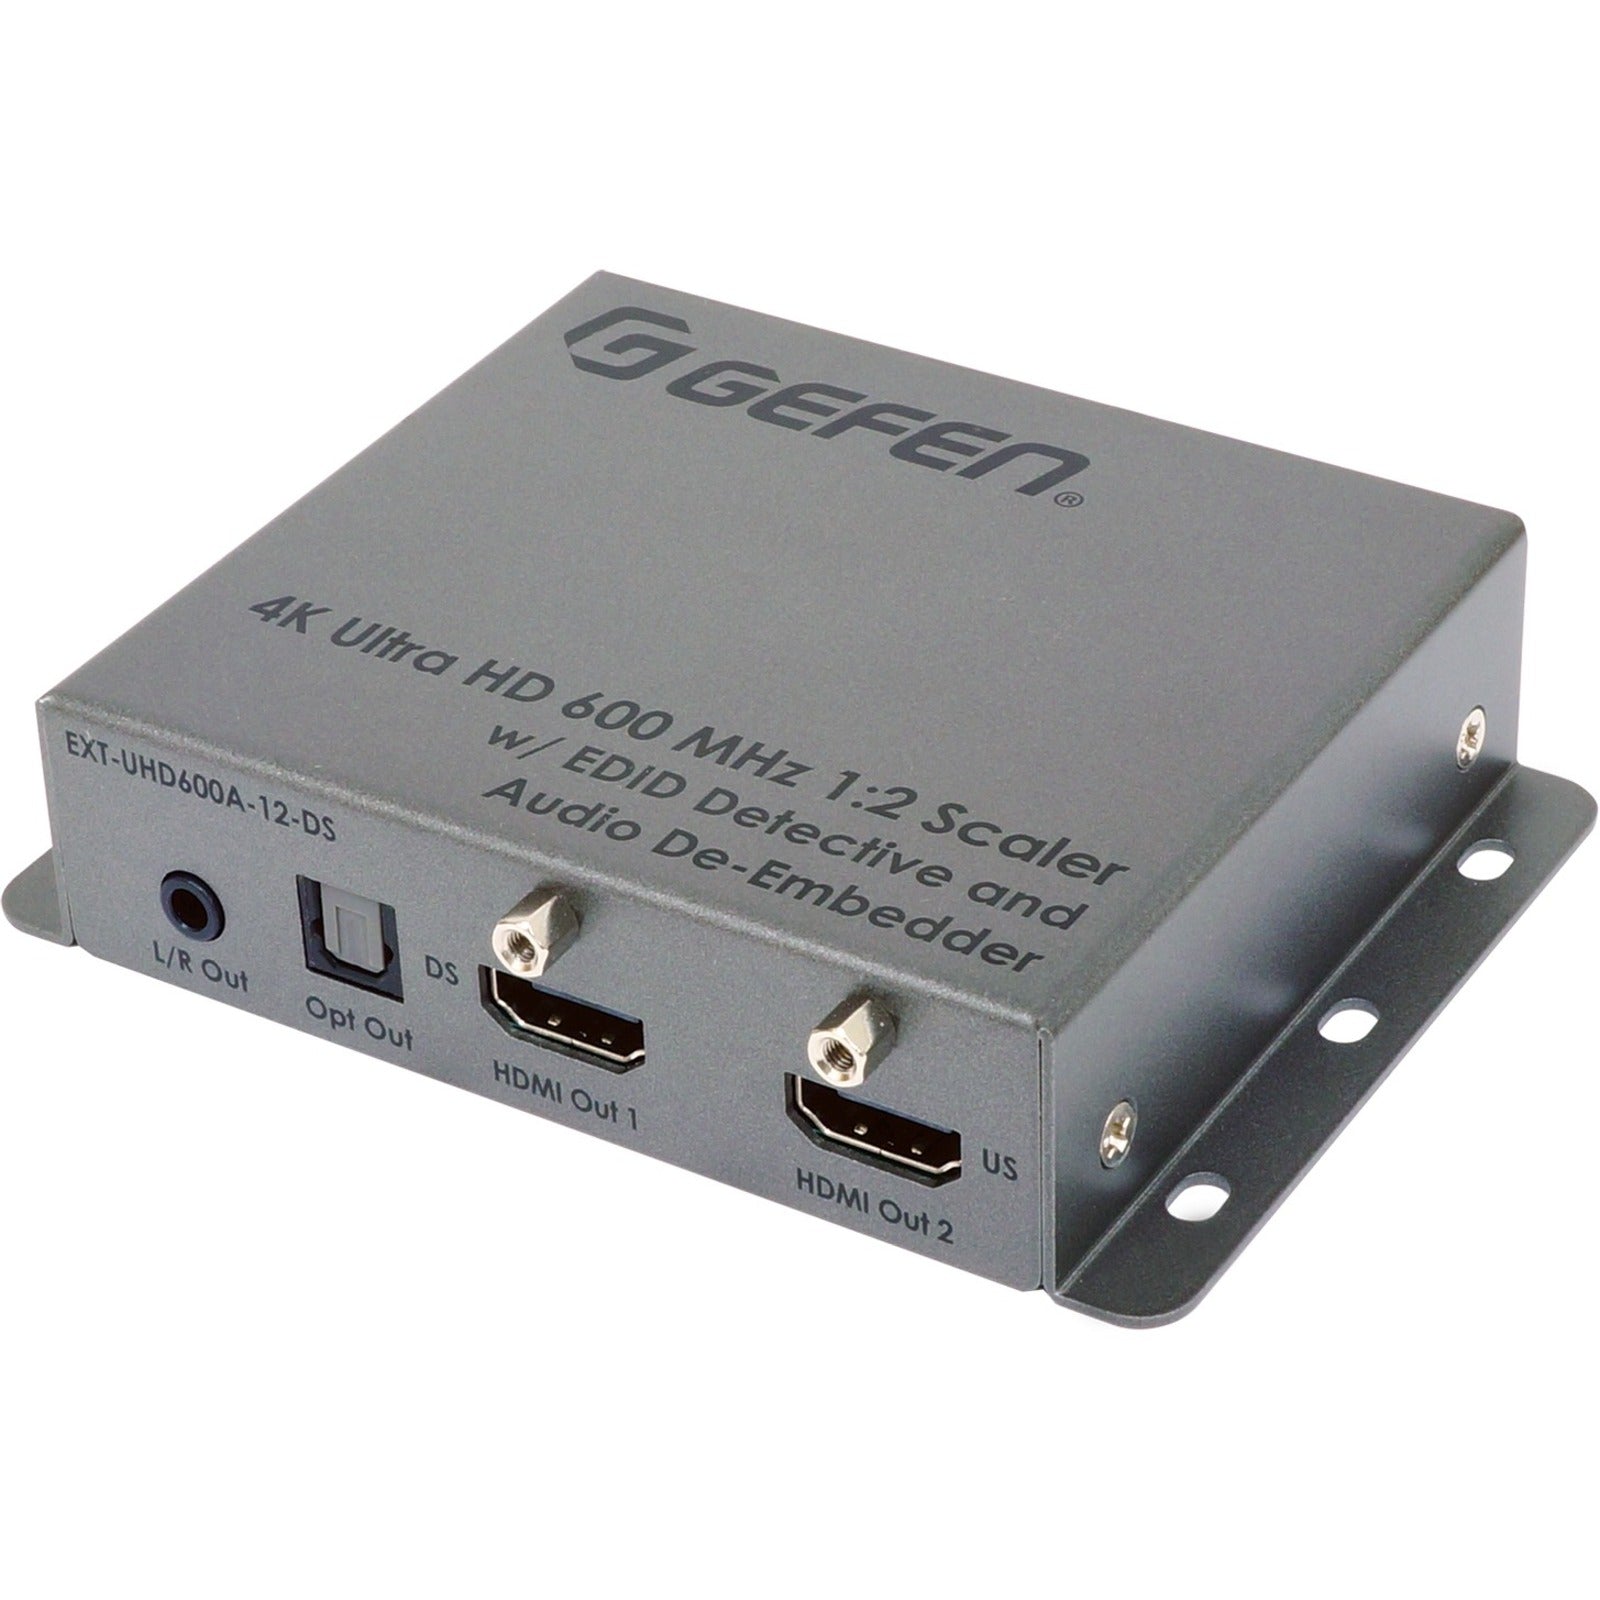 Gefen EXT-UHD600A-12-DS 4K Ultra HD 600 MHz 1:2 Scaler w/ EDID Detective and Audio De-Embedder, Video Scaling, Audio De-embedding